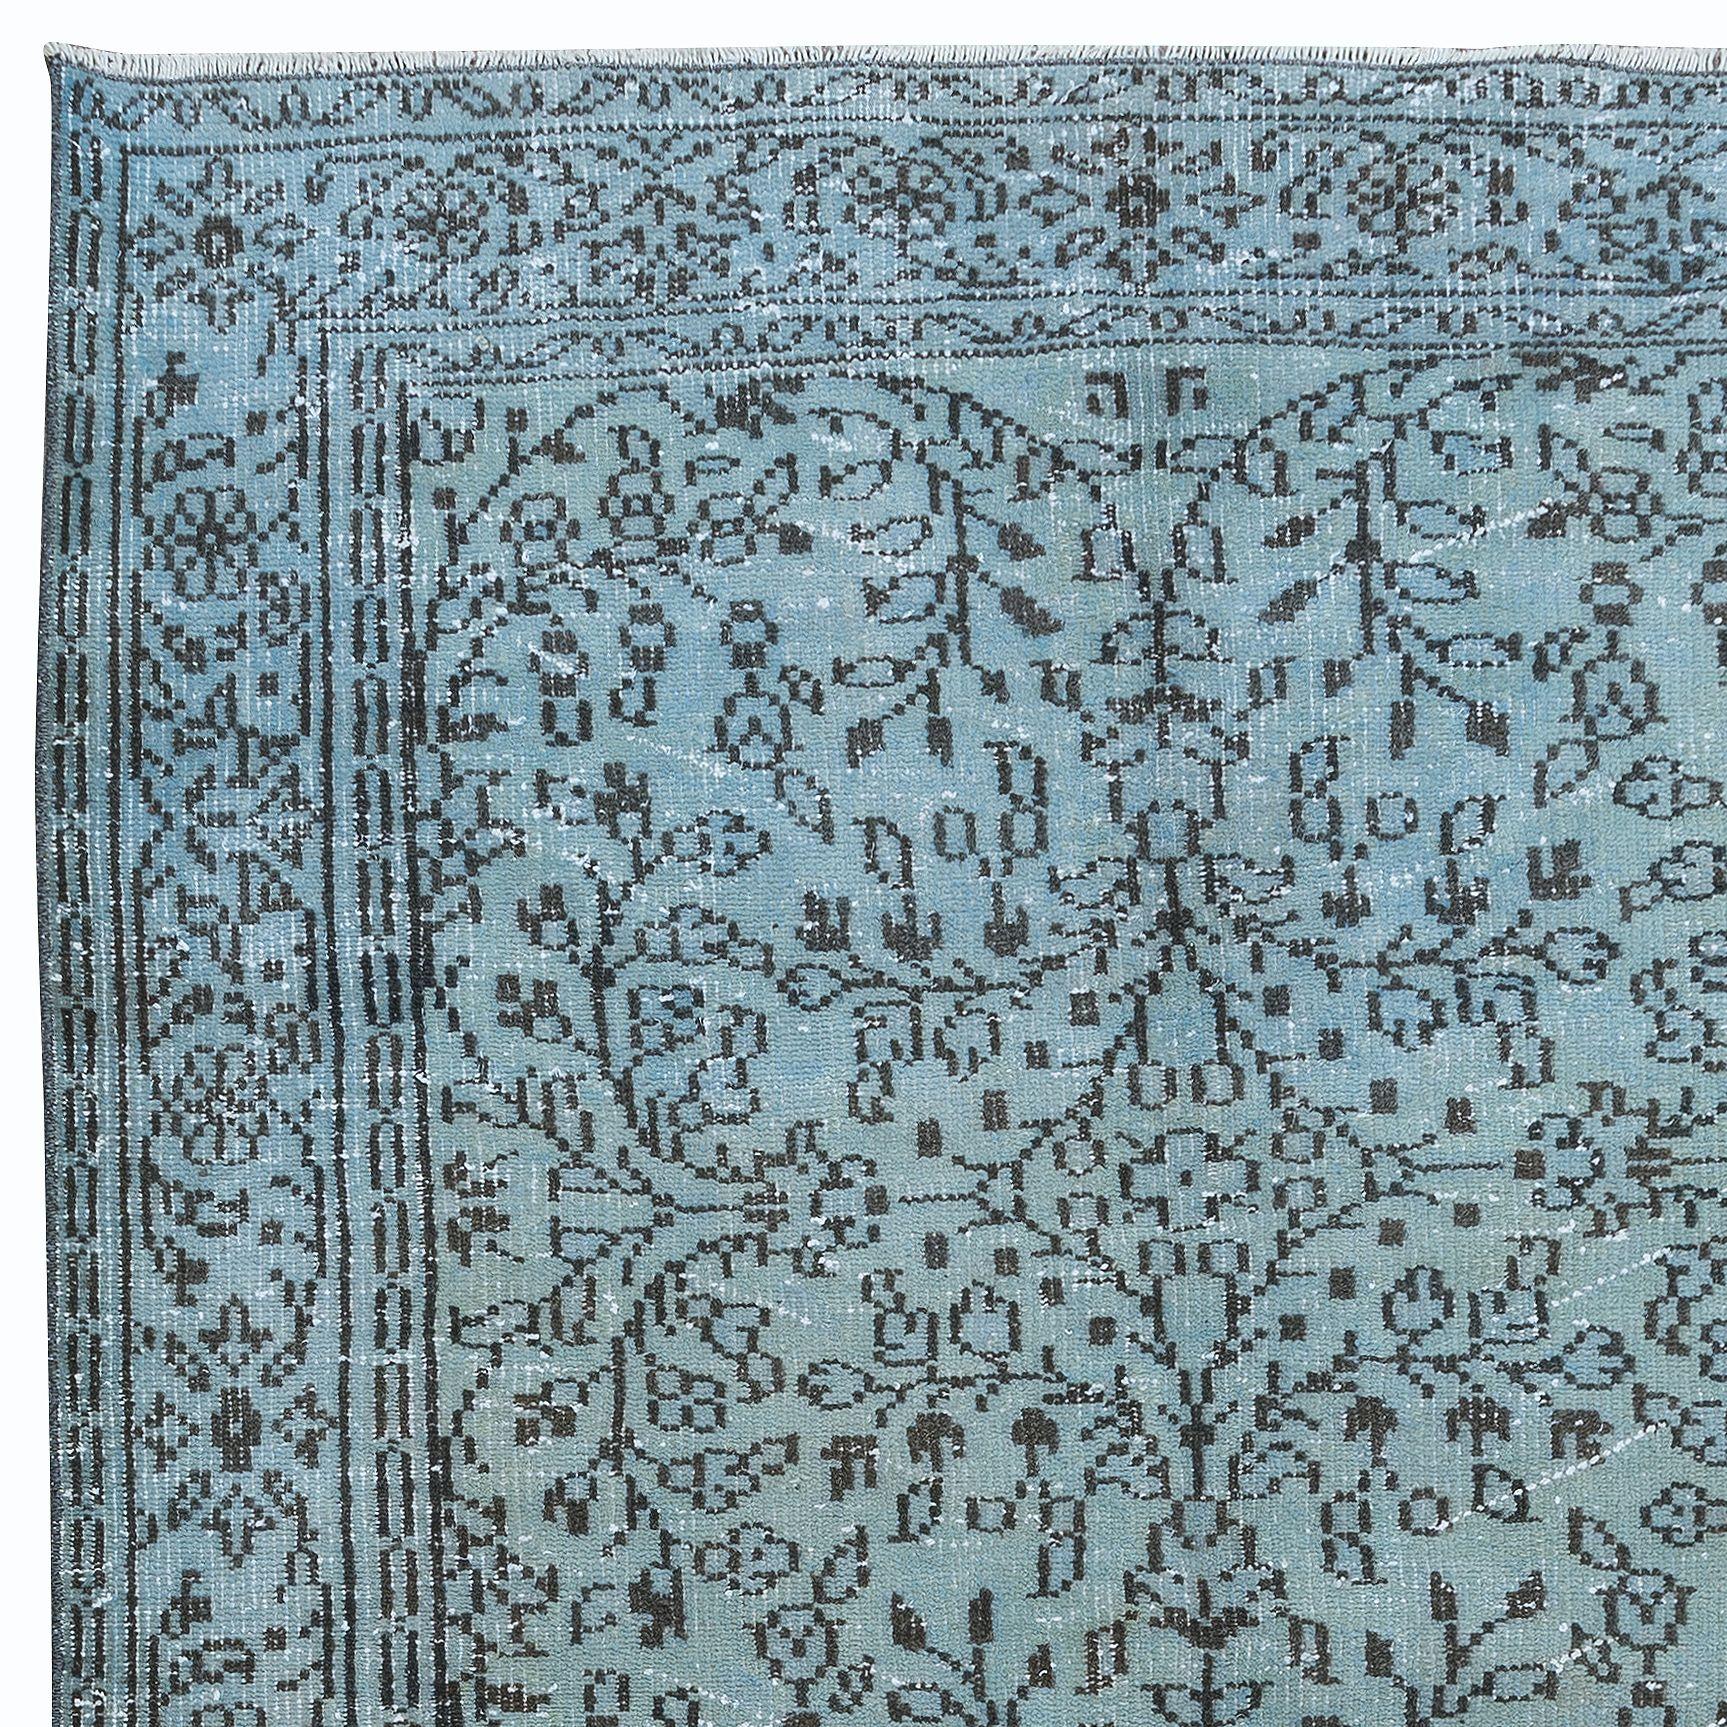 Hand-Woven 5.3x8 Ft Ethnic Handmade Turkish Rug in Light Blue, Vintage Floral Carpet For Sale